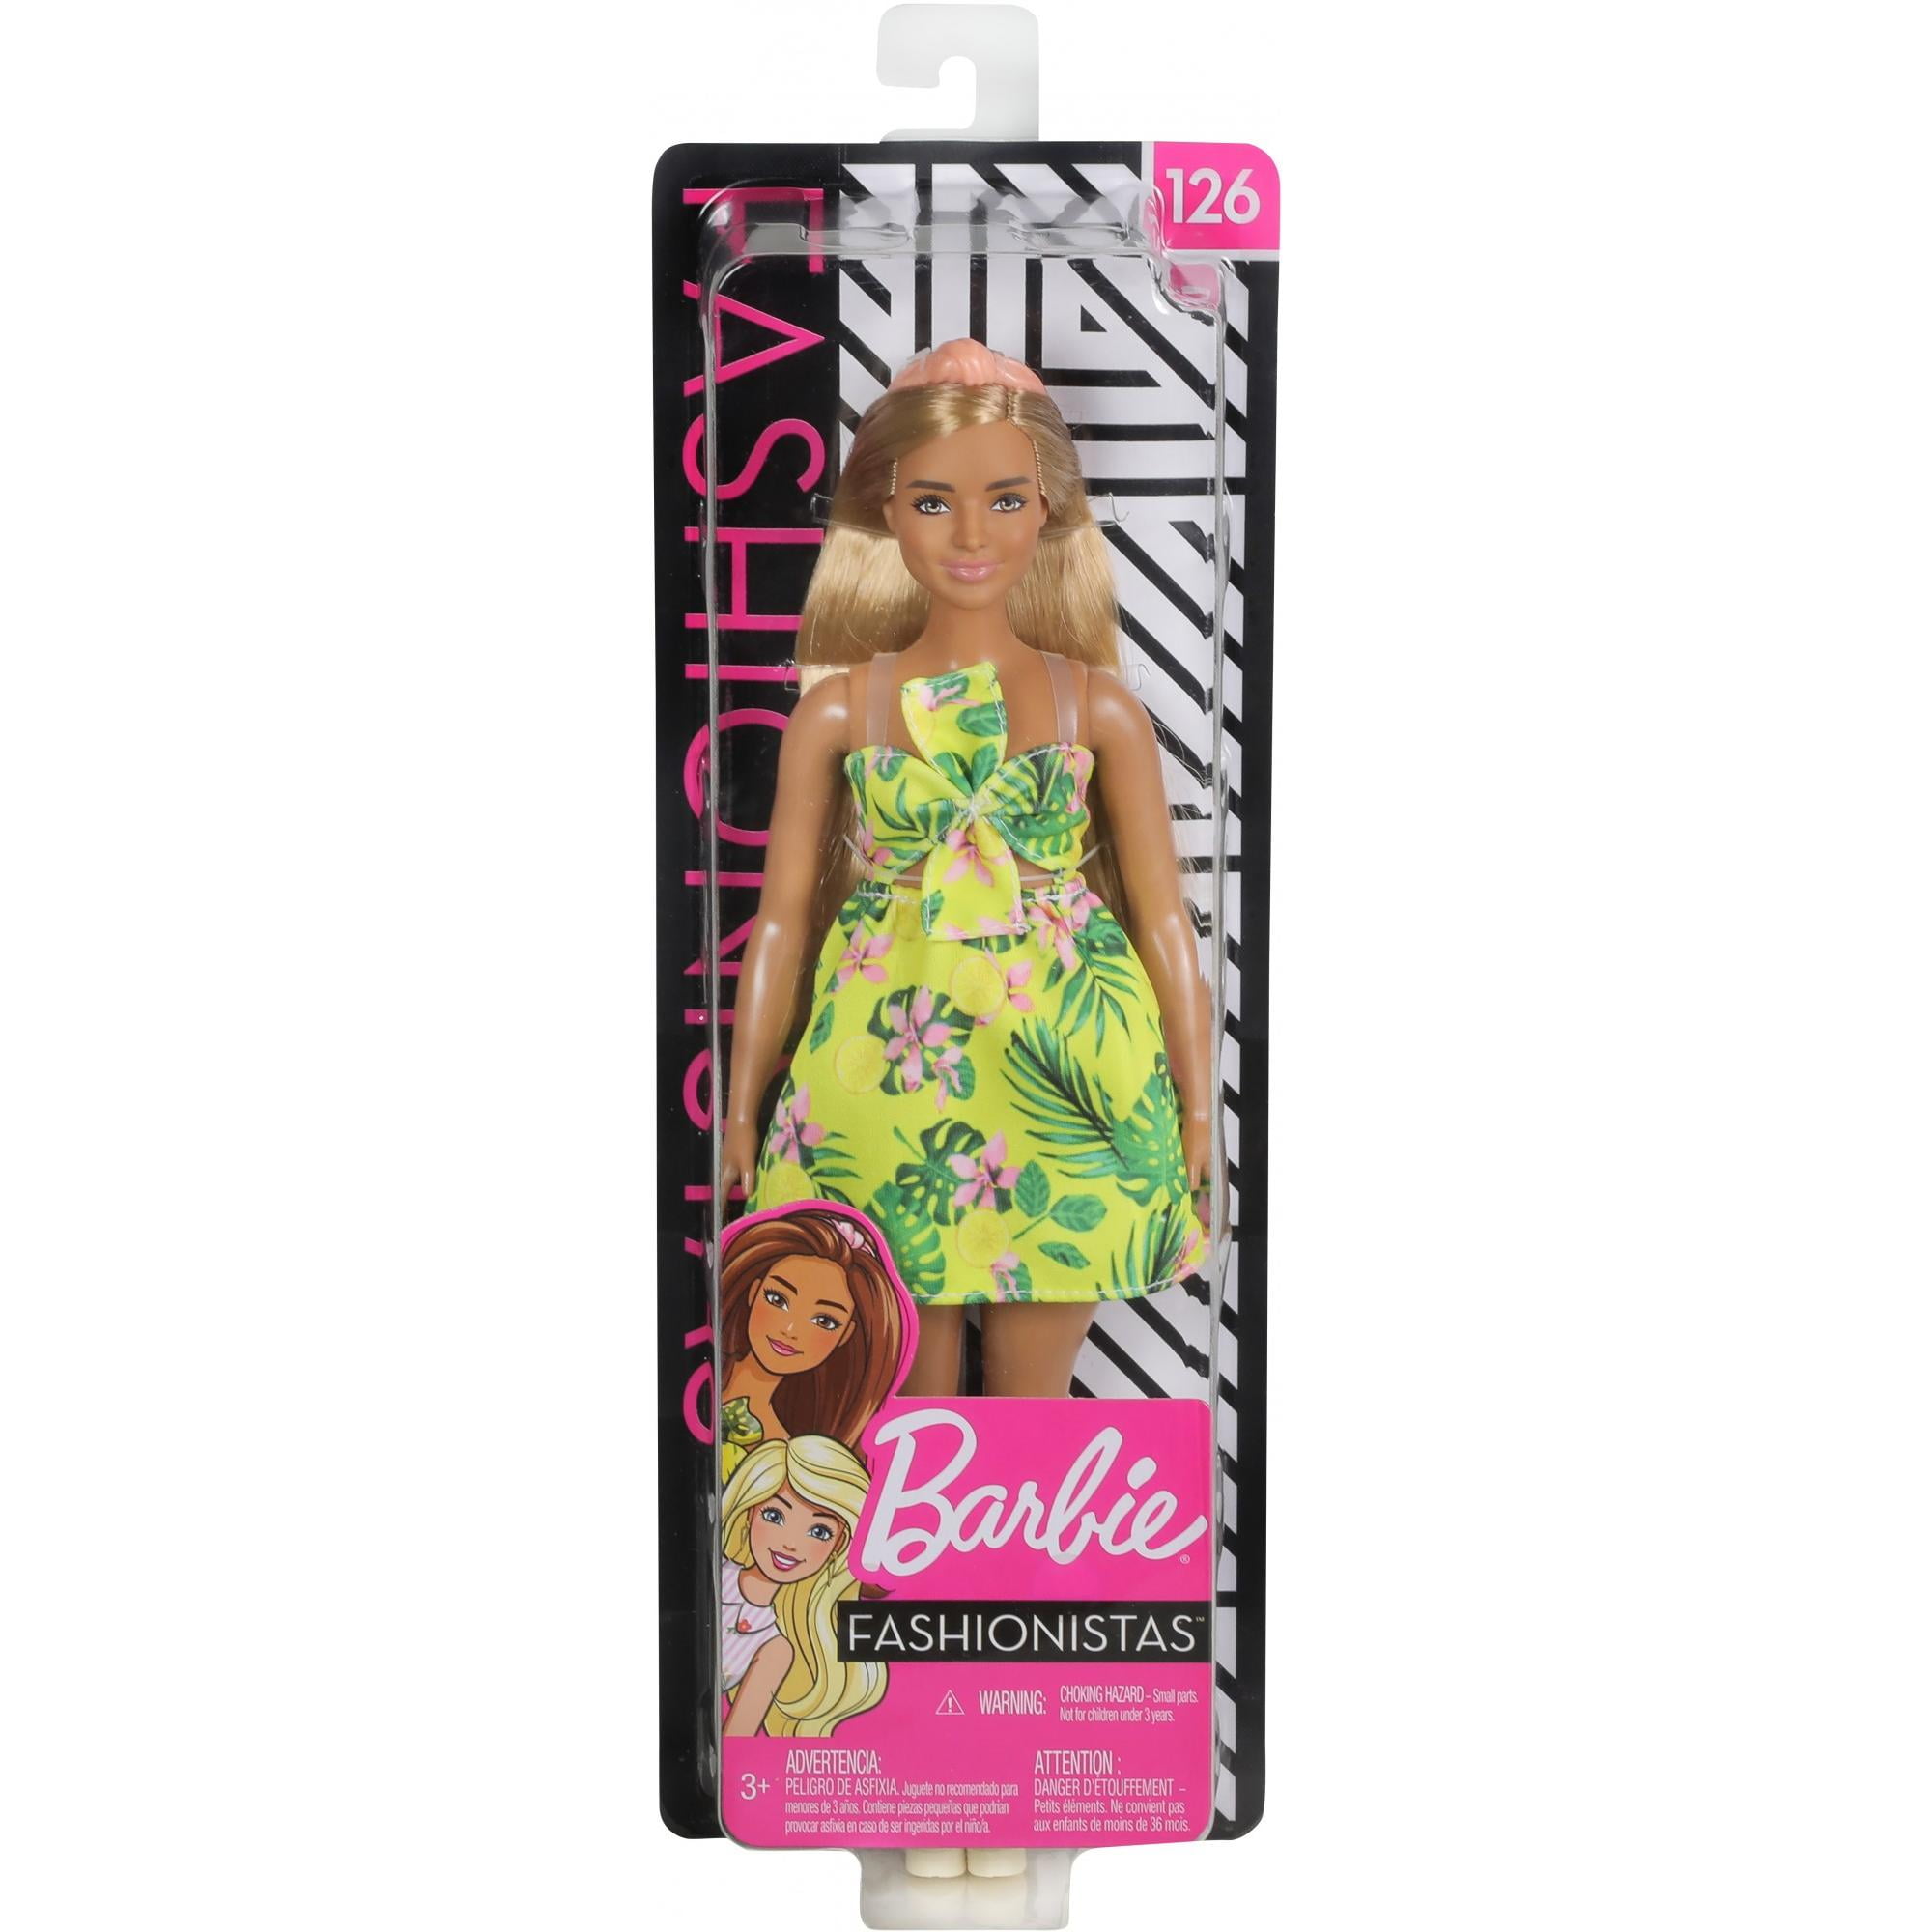 Details about   CURVY Fashionista Barbie  RED & BLACK PLAID LONG SLEEVE DRESS 